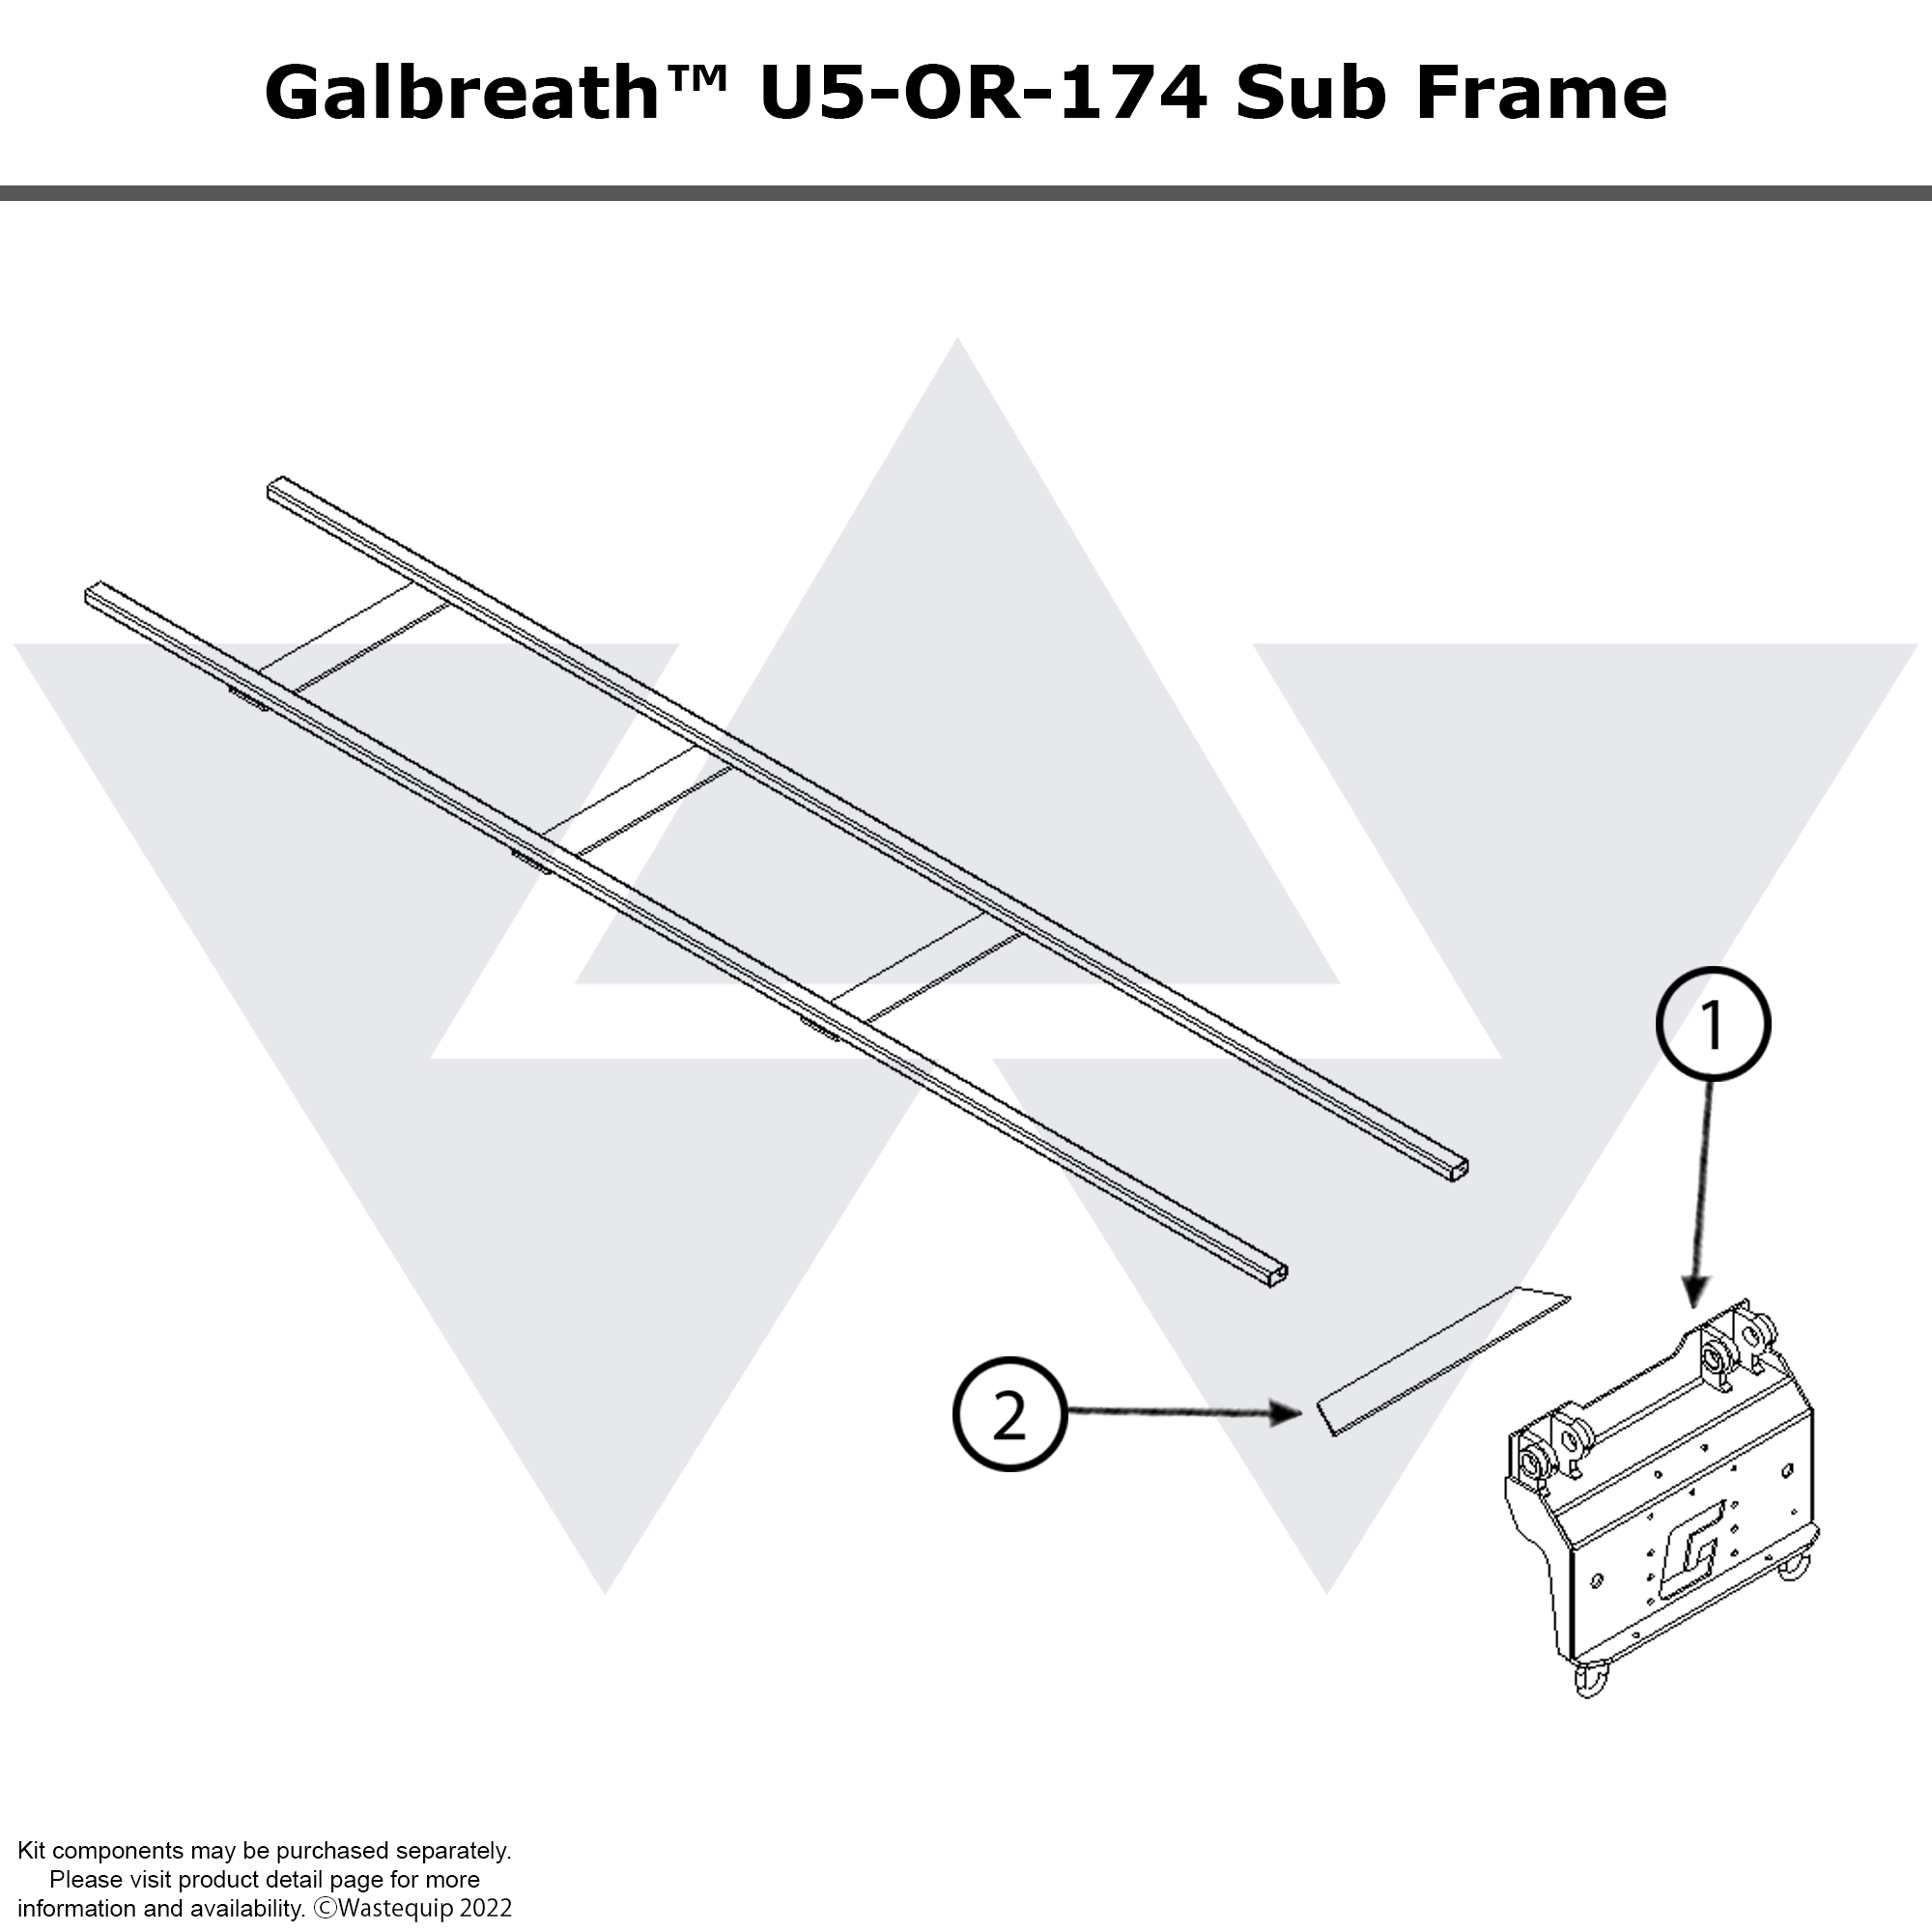 Galbreath™ Hoist U5-OR-174 Sub Frame Assembly